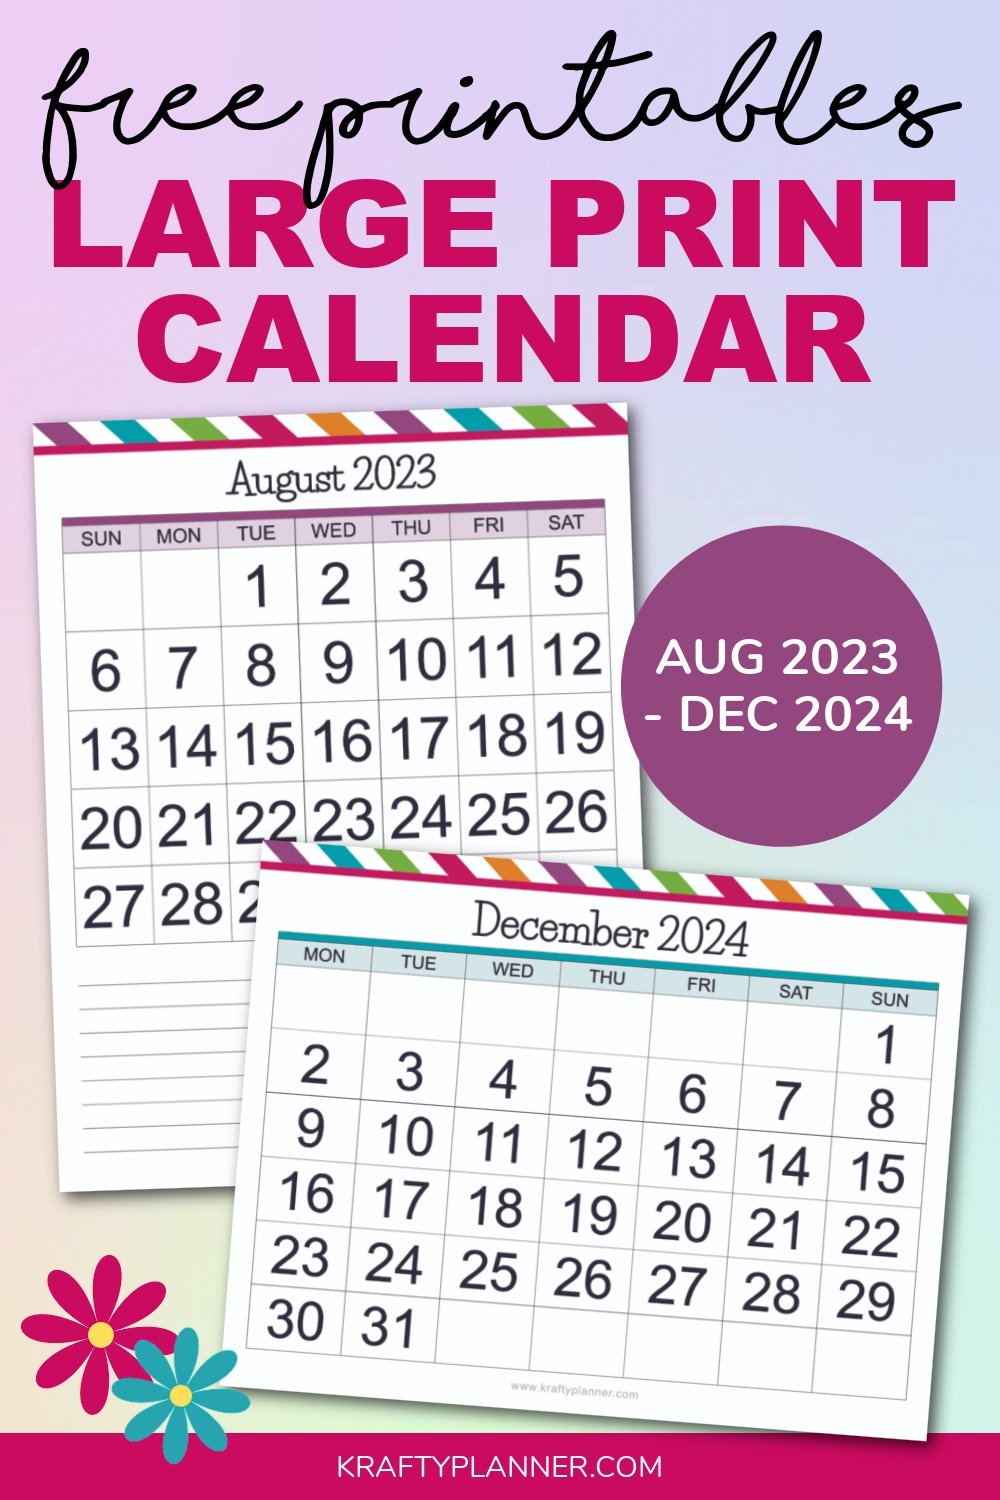 Free Printable Large Print Calendars: August 2023 - December 2024 within Free Printable Calendar 2024 Big Numbers